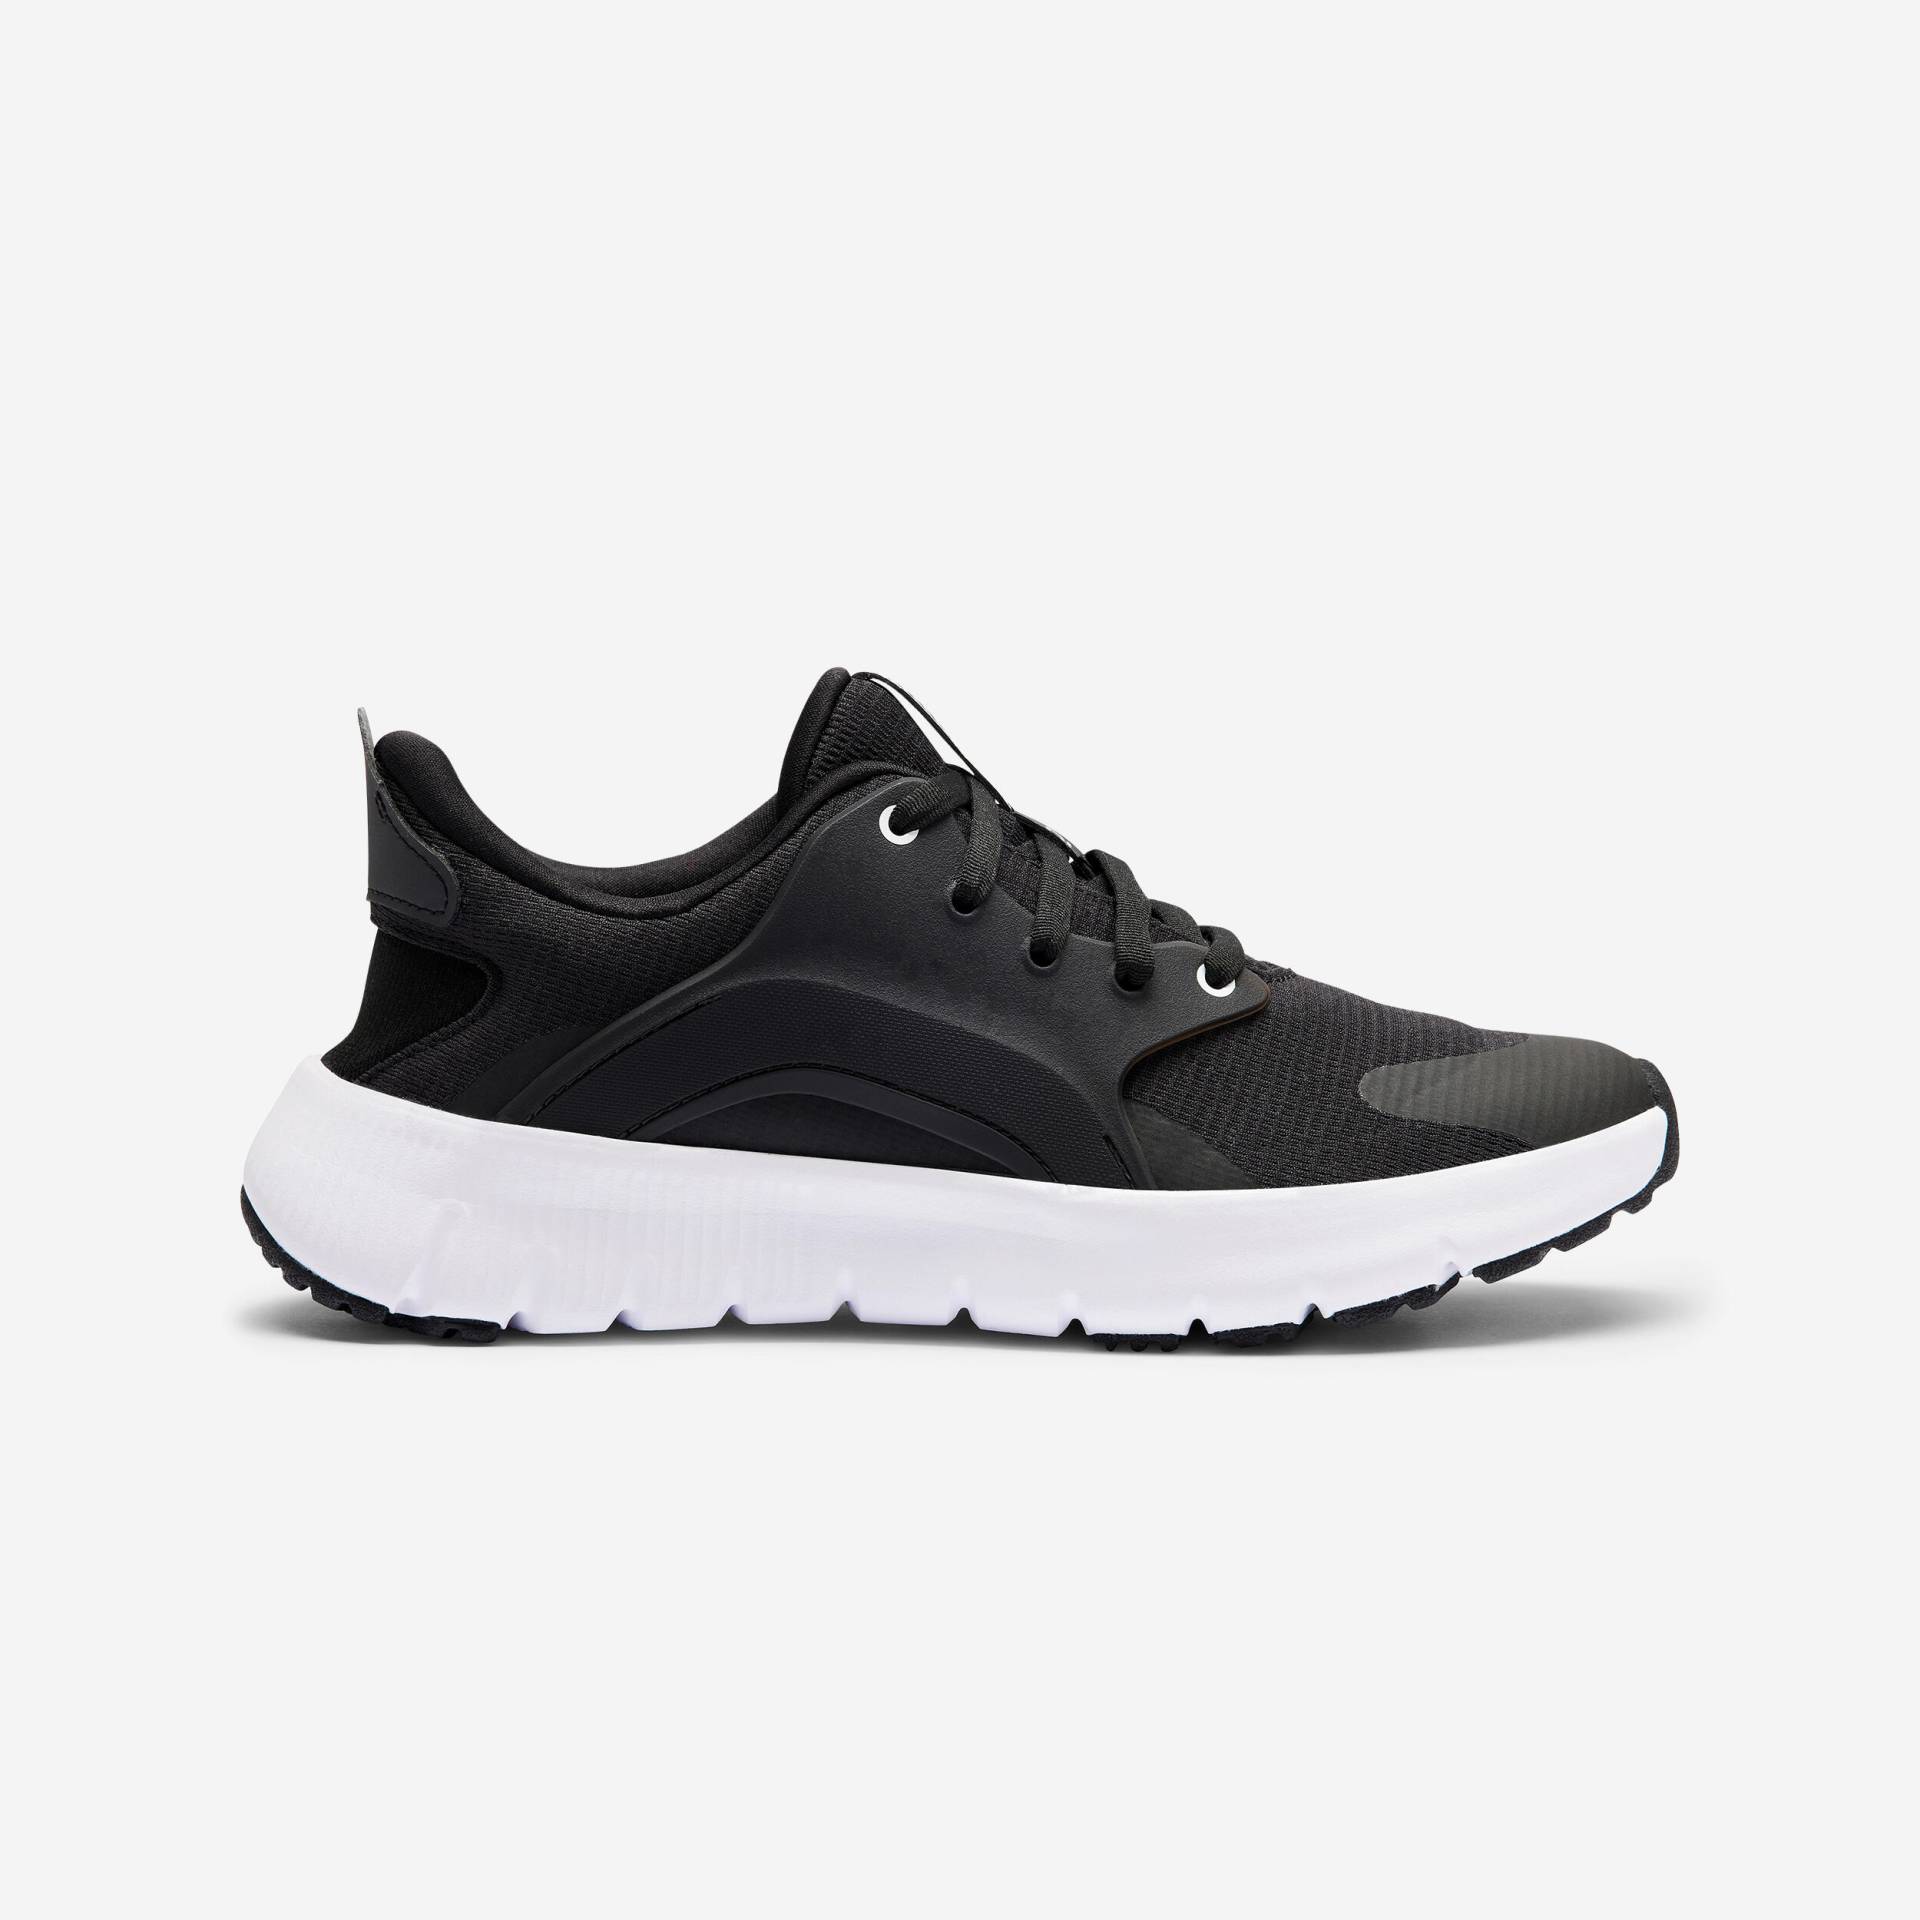 Walking Schuhe Sneaker Damen Standard - SW500.1 schwarz von Kalenji